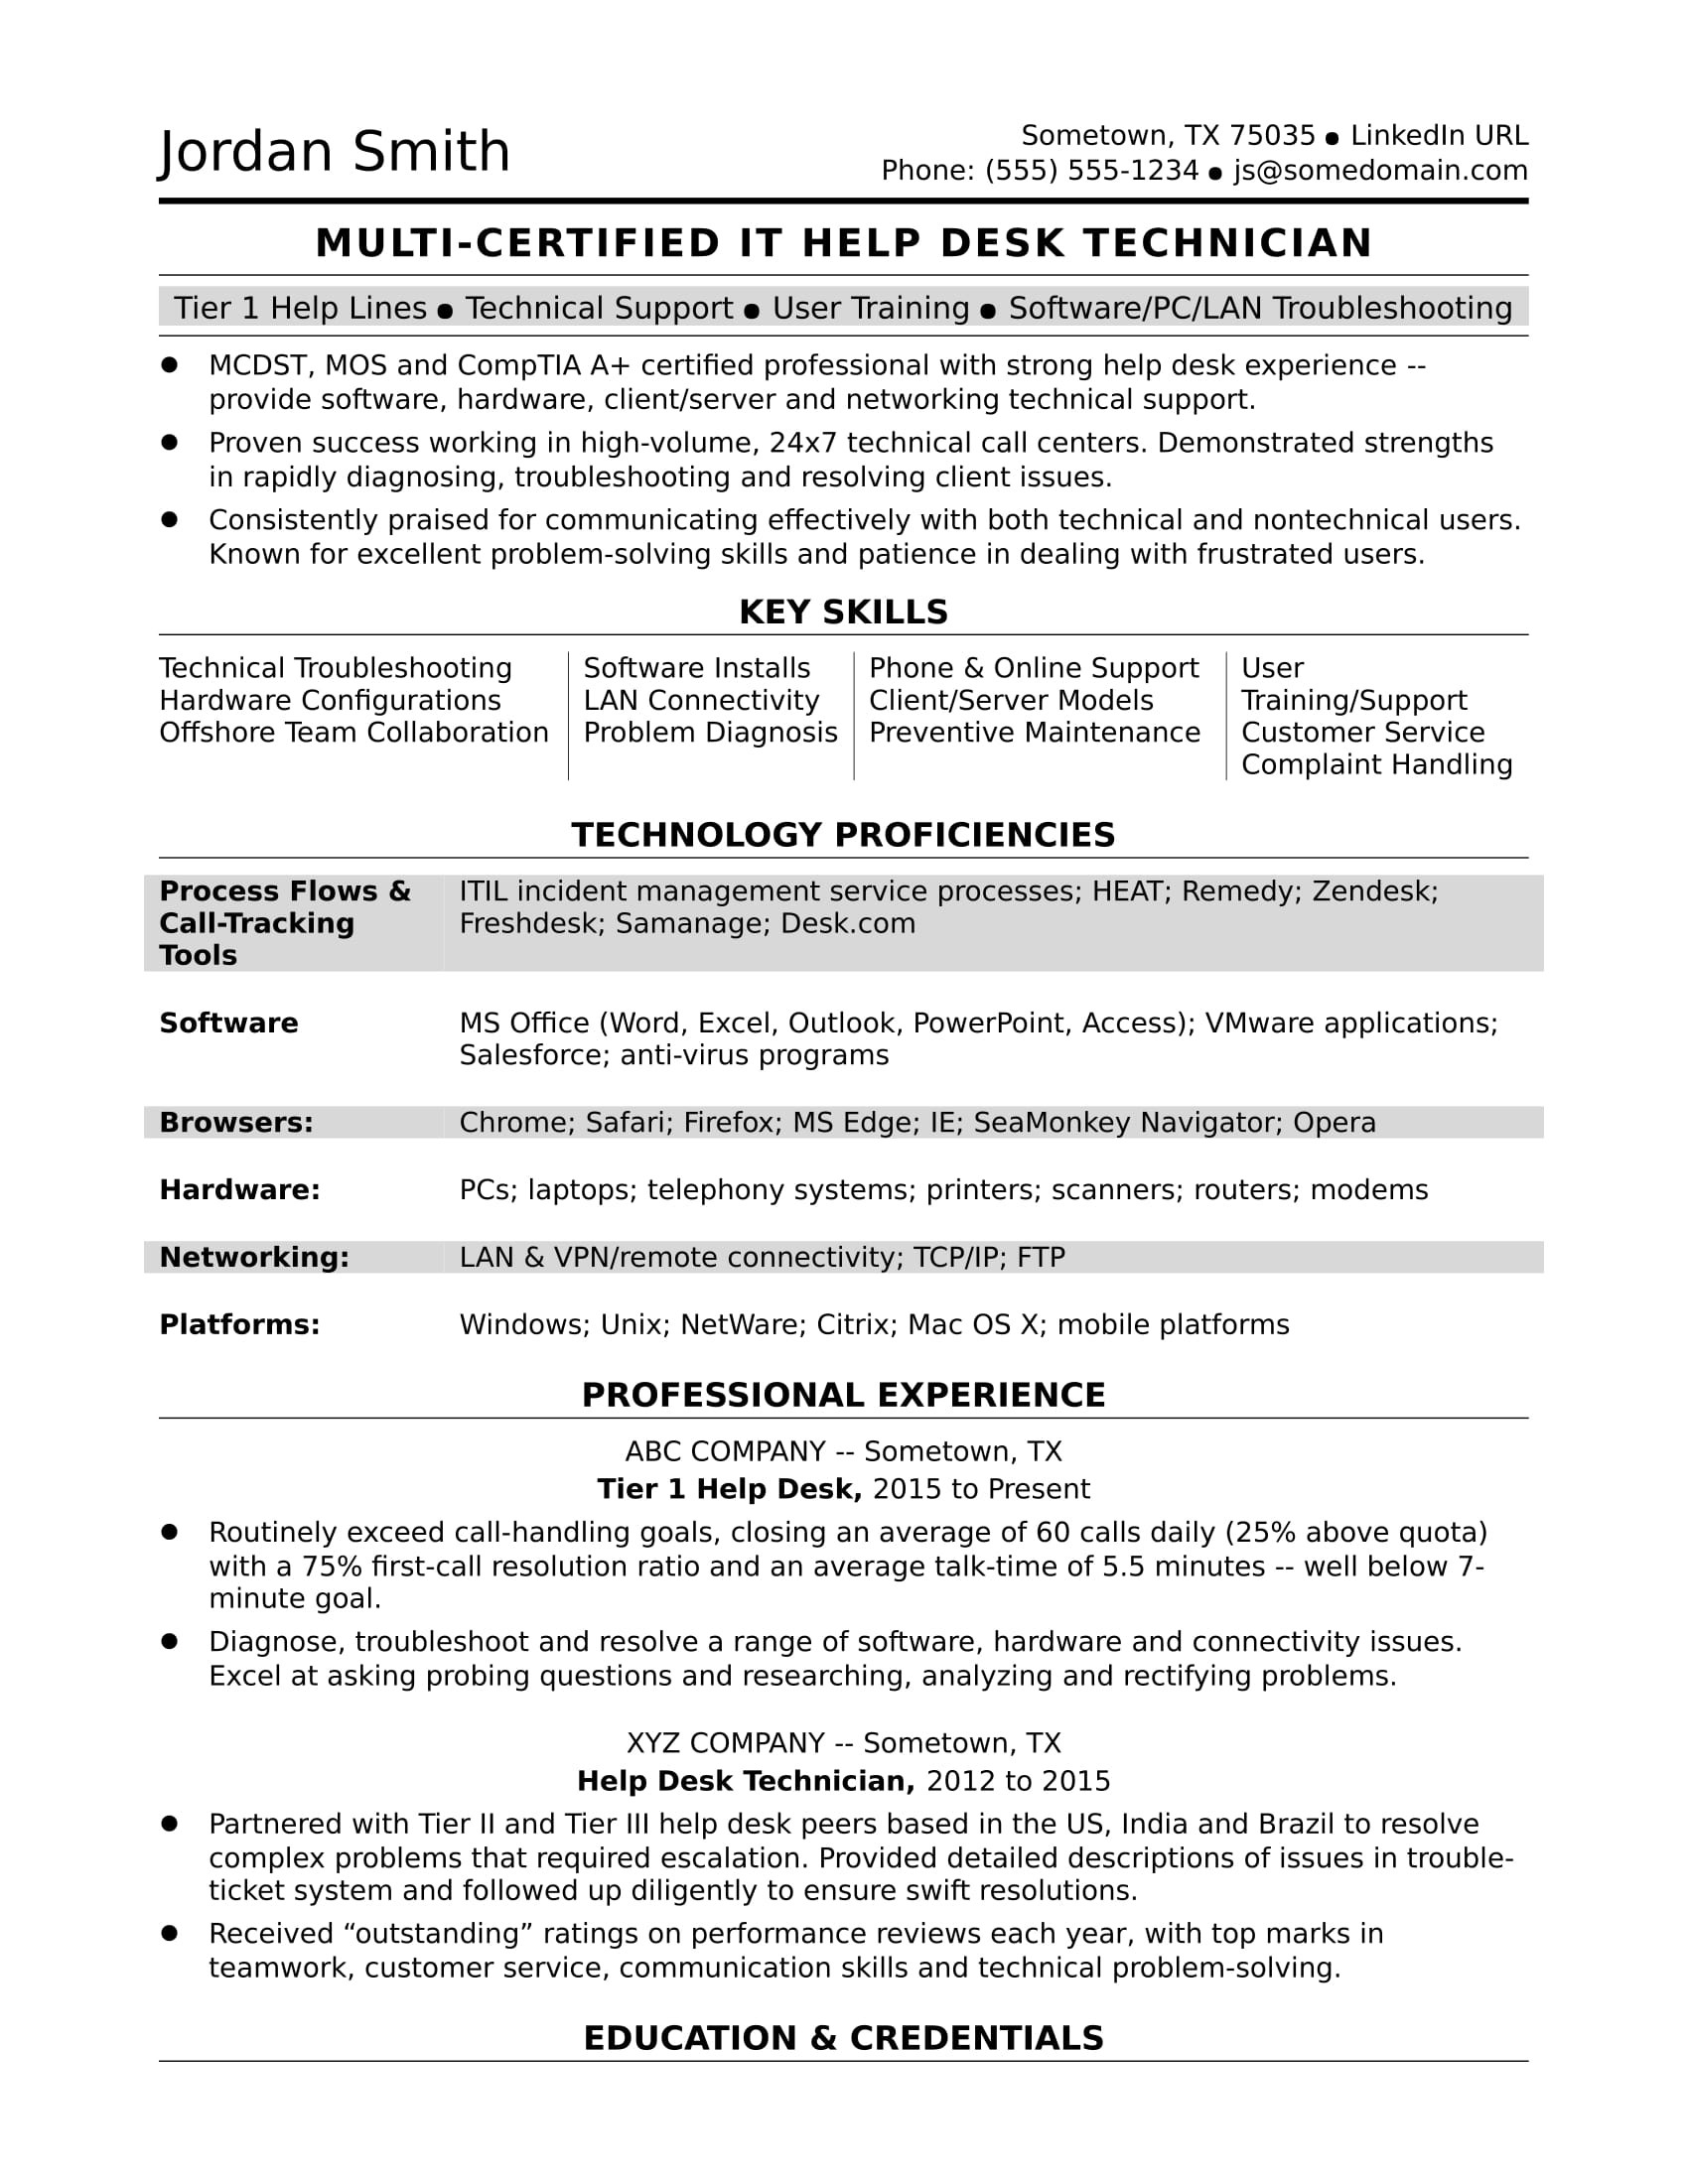 Sample Of Help Desk Resume Summary Of Qualications Sample Resume for A Midlevel It Help Desk Professional Monster.com